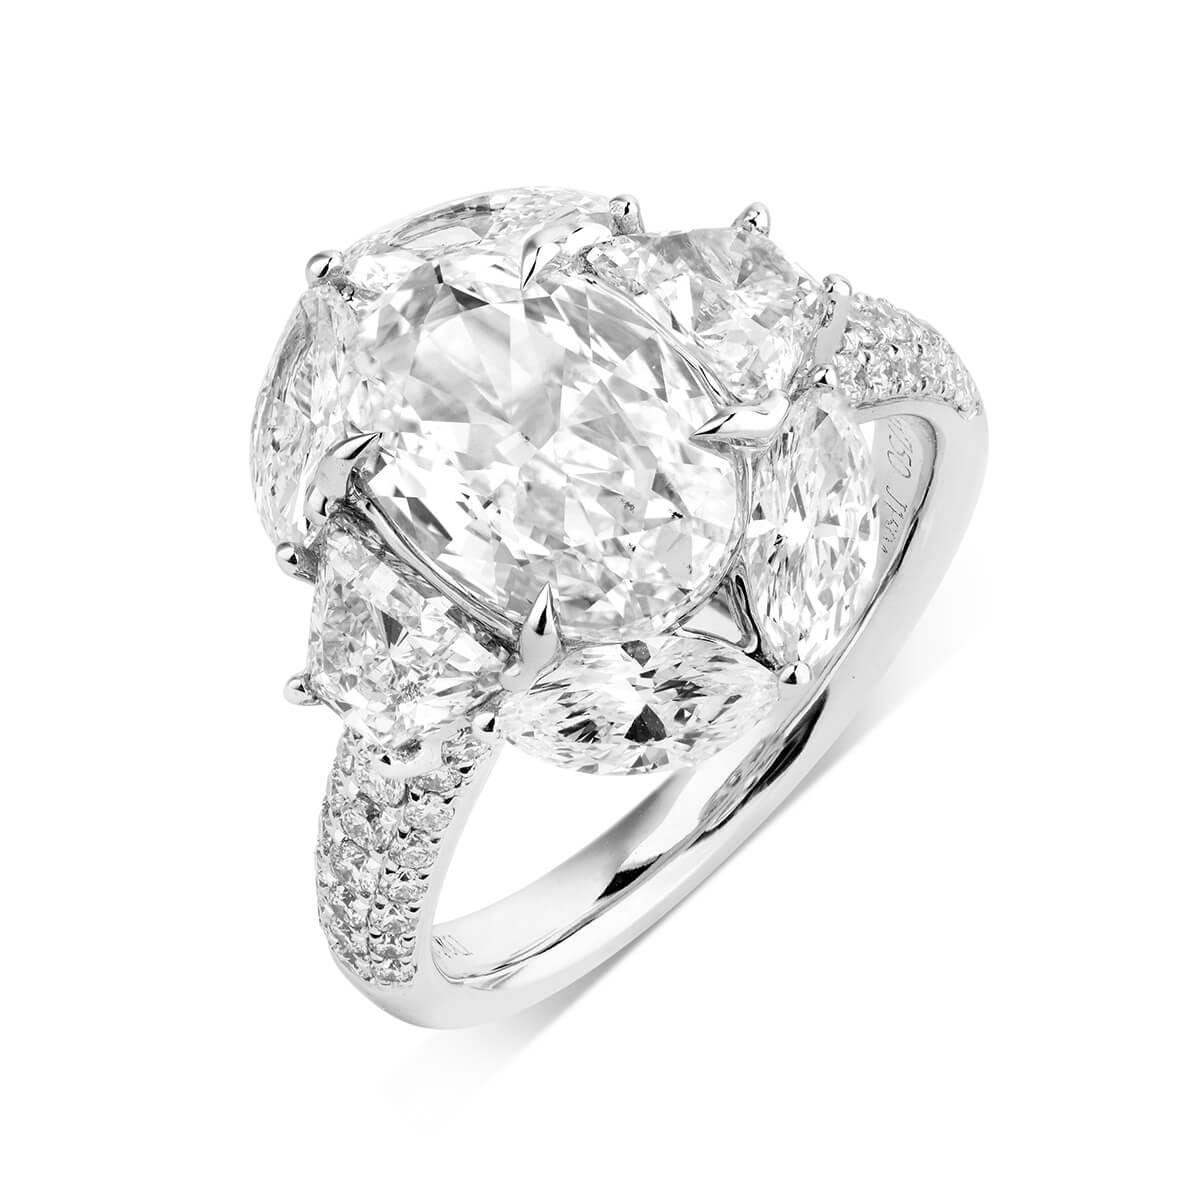  White Diamond Ring, 4.15 Ct. TW, Oval shape, GIA Certified, 2287856975